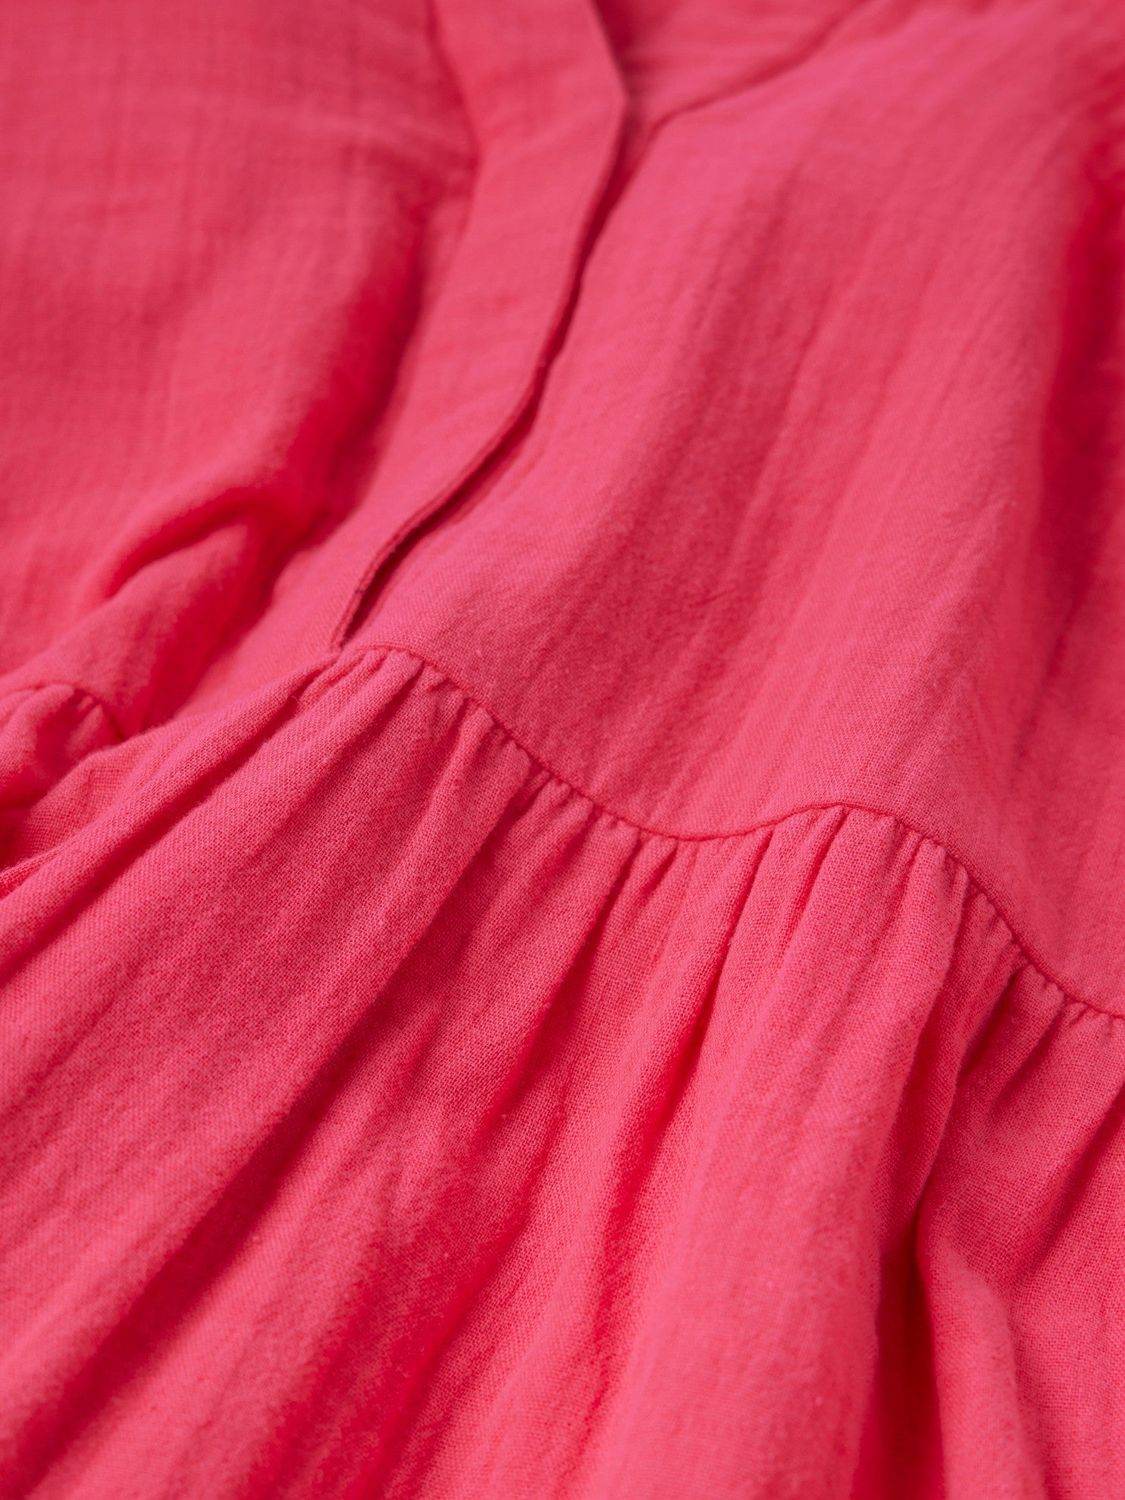 Mint Velvet Ruffle Sleeve Mini Cotton Dress, Red, XS